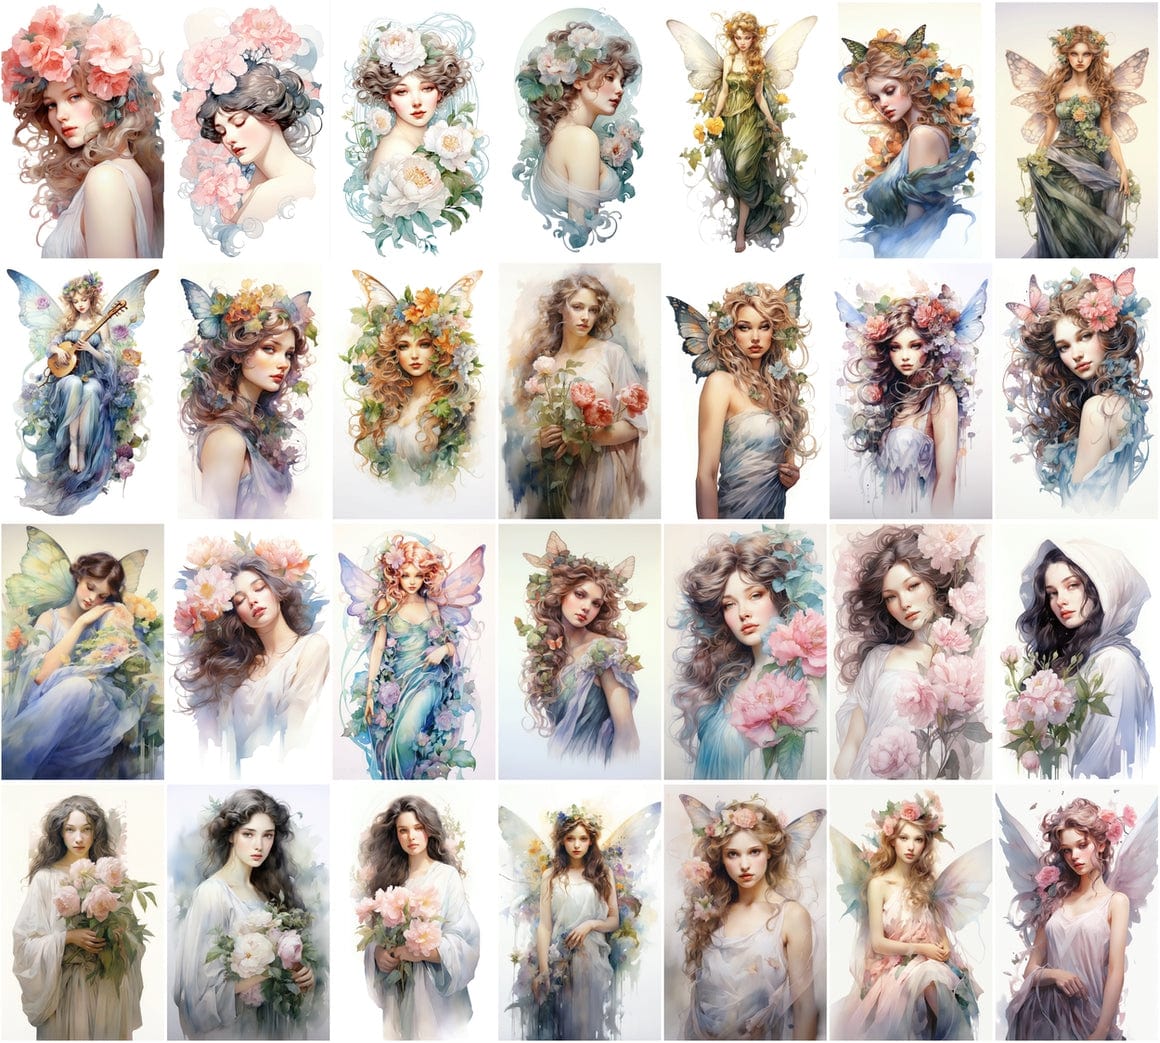 Art Nouveau Woman Images, 220 PNGs, Watercolor Style, Commercial License Included Digital Download Sumobundle